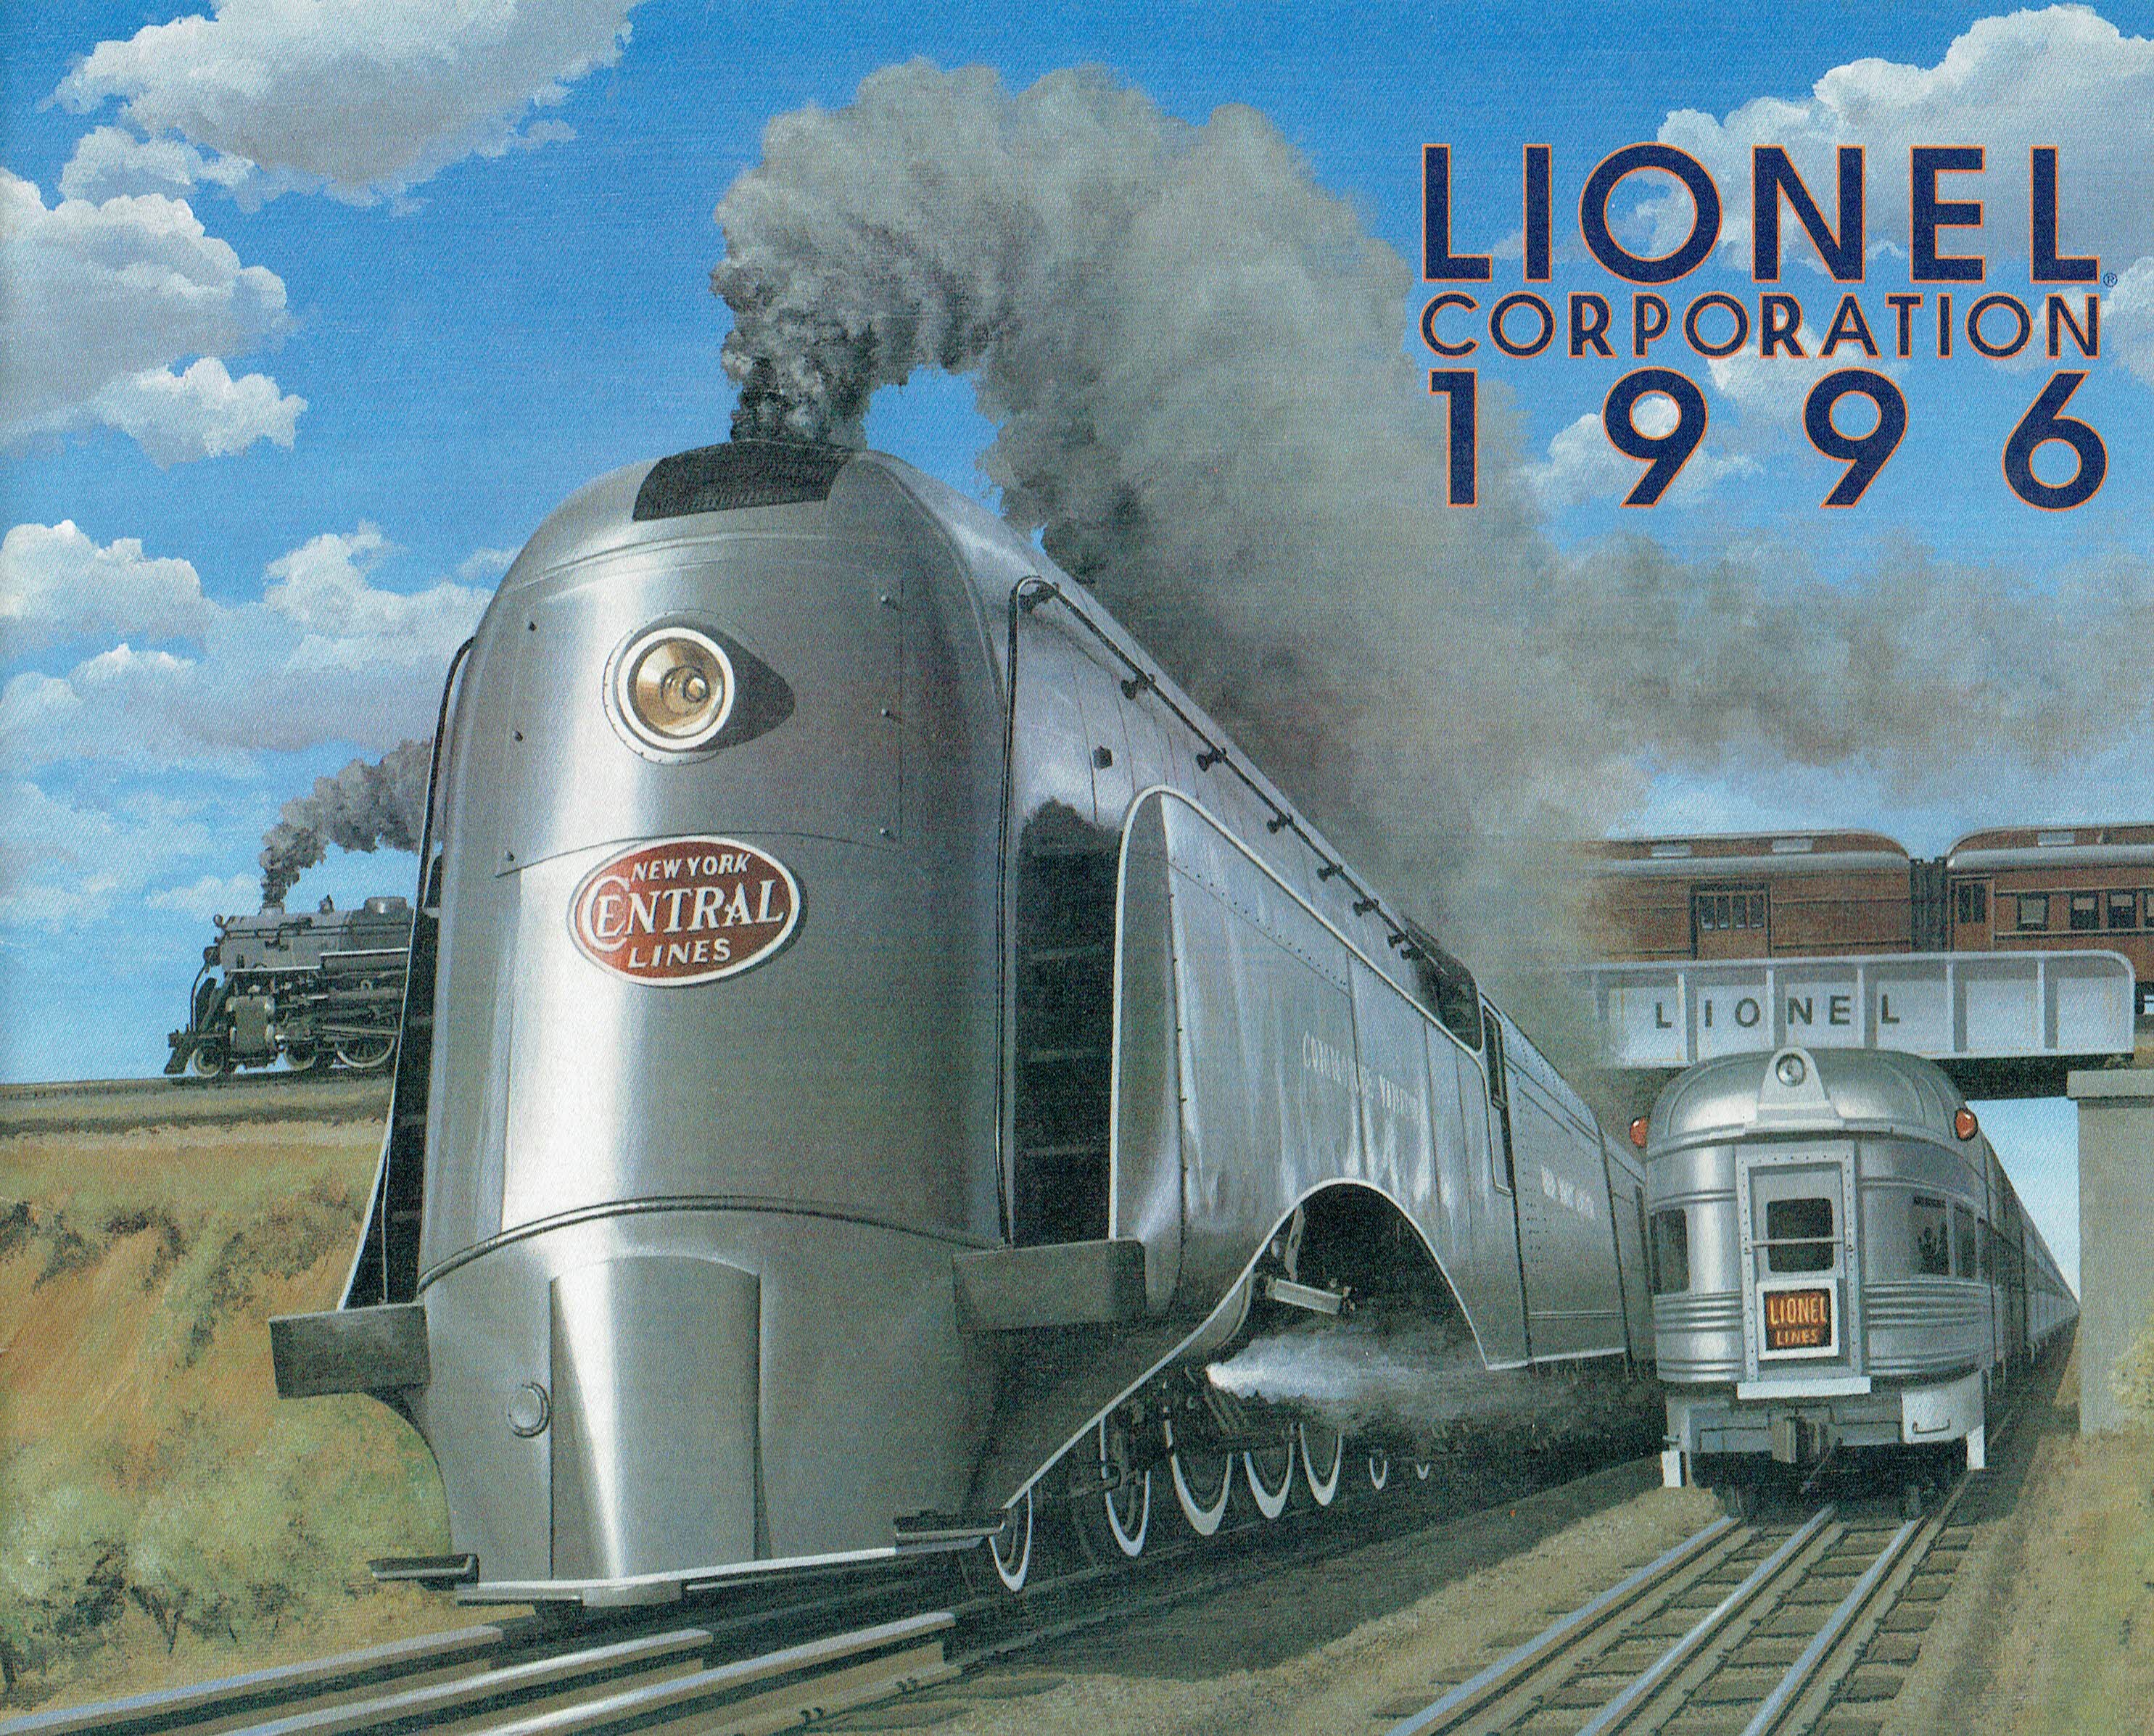 Lionel 1996 Corporation Catalog image